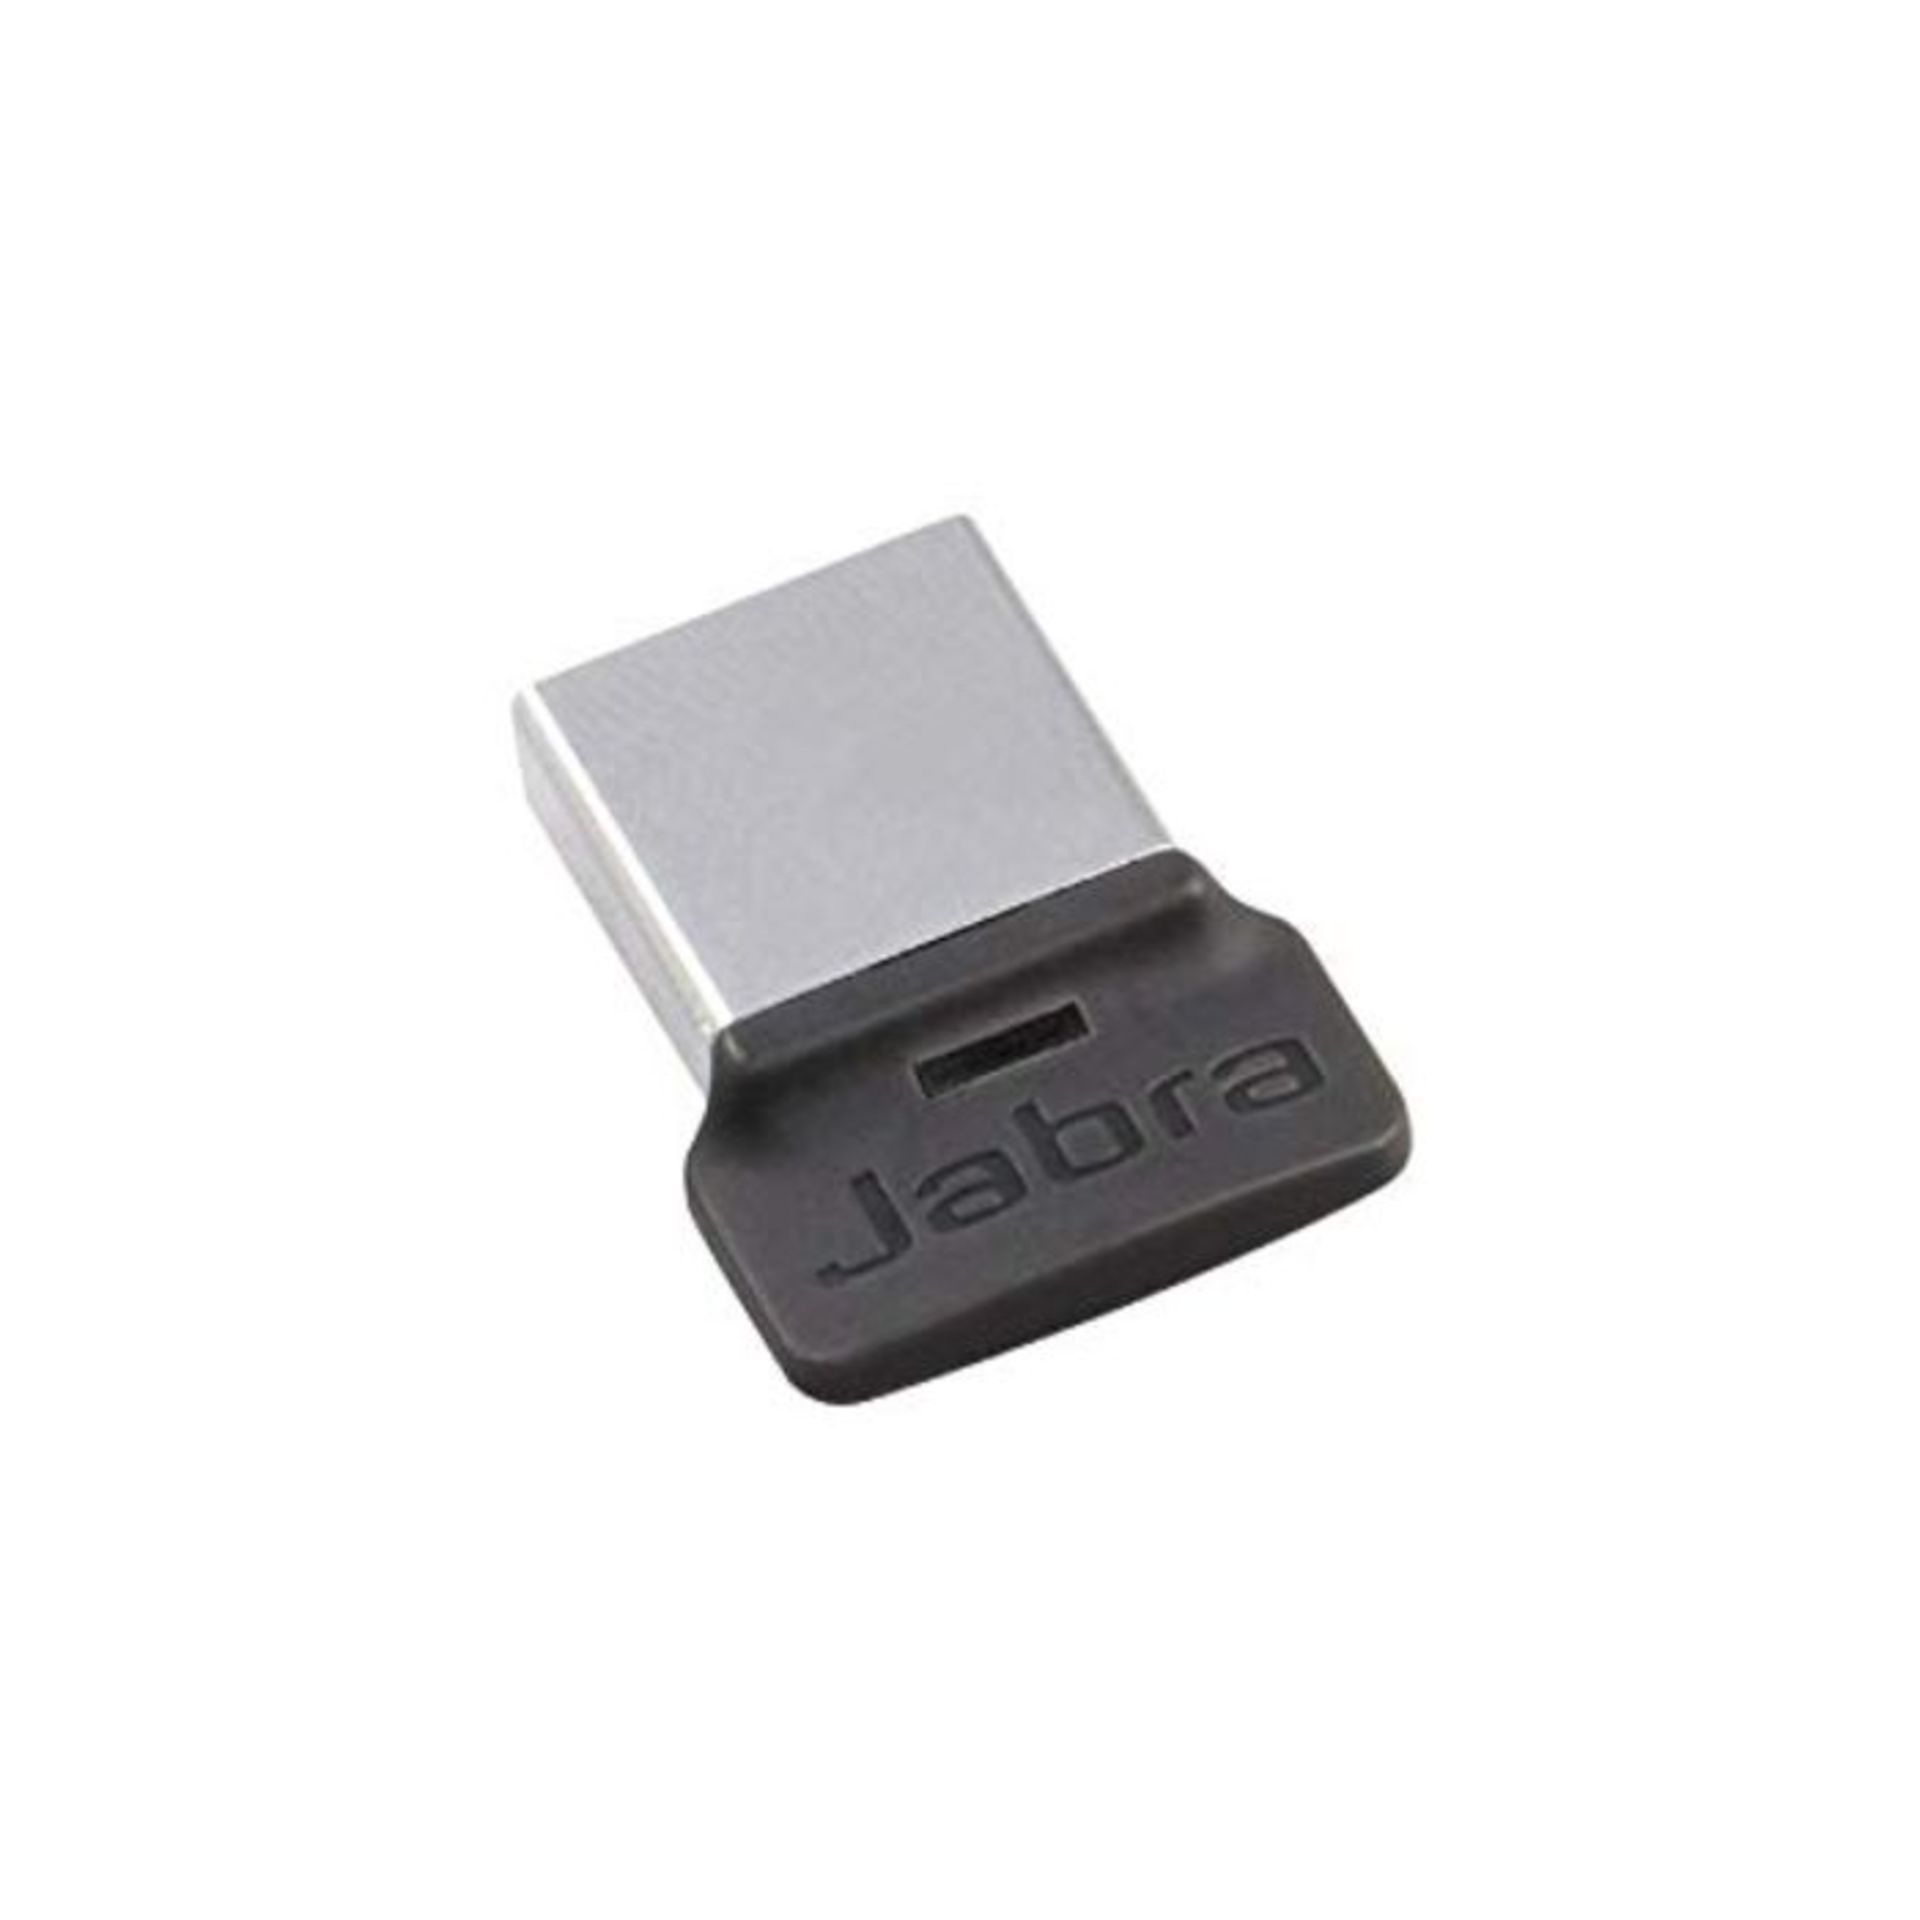 Jabra Link 370 USB A Bluetooth Adapter MS â¬  fÃ¼r Jabra Headsets â¬  30 M